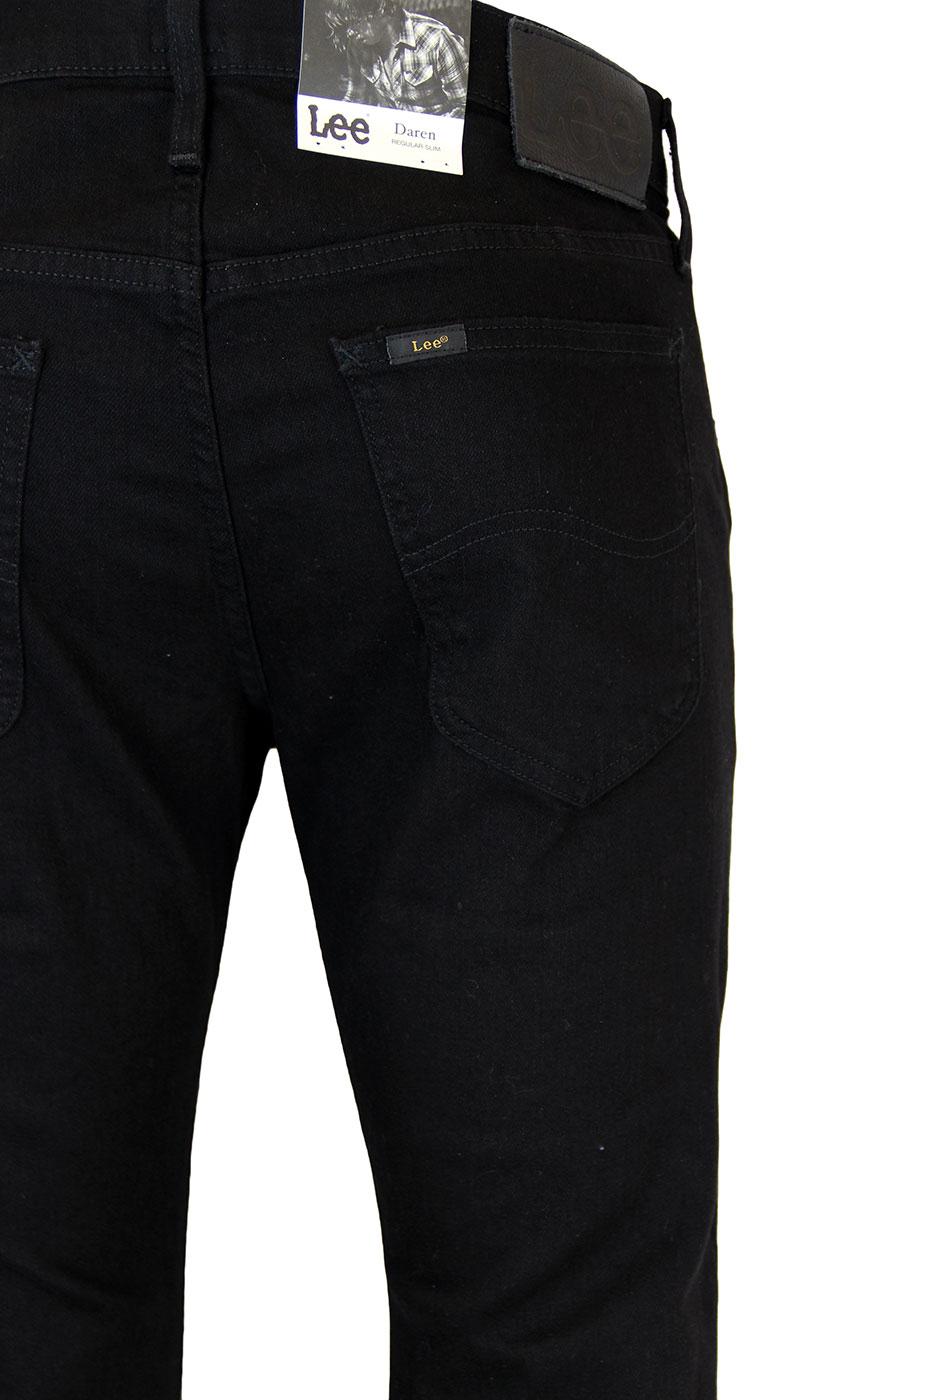 LEE Daren Retro Mod Regular Waist Slim Leg Black Denim Jeans